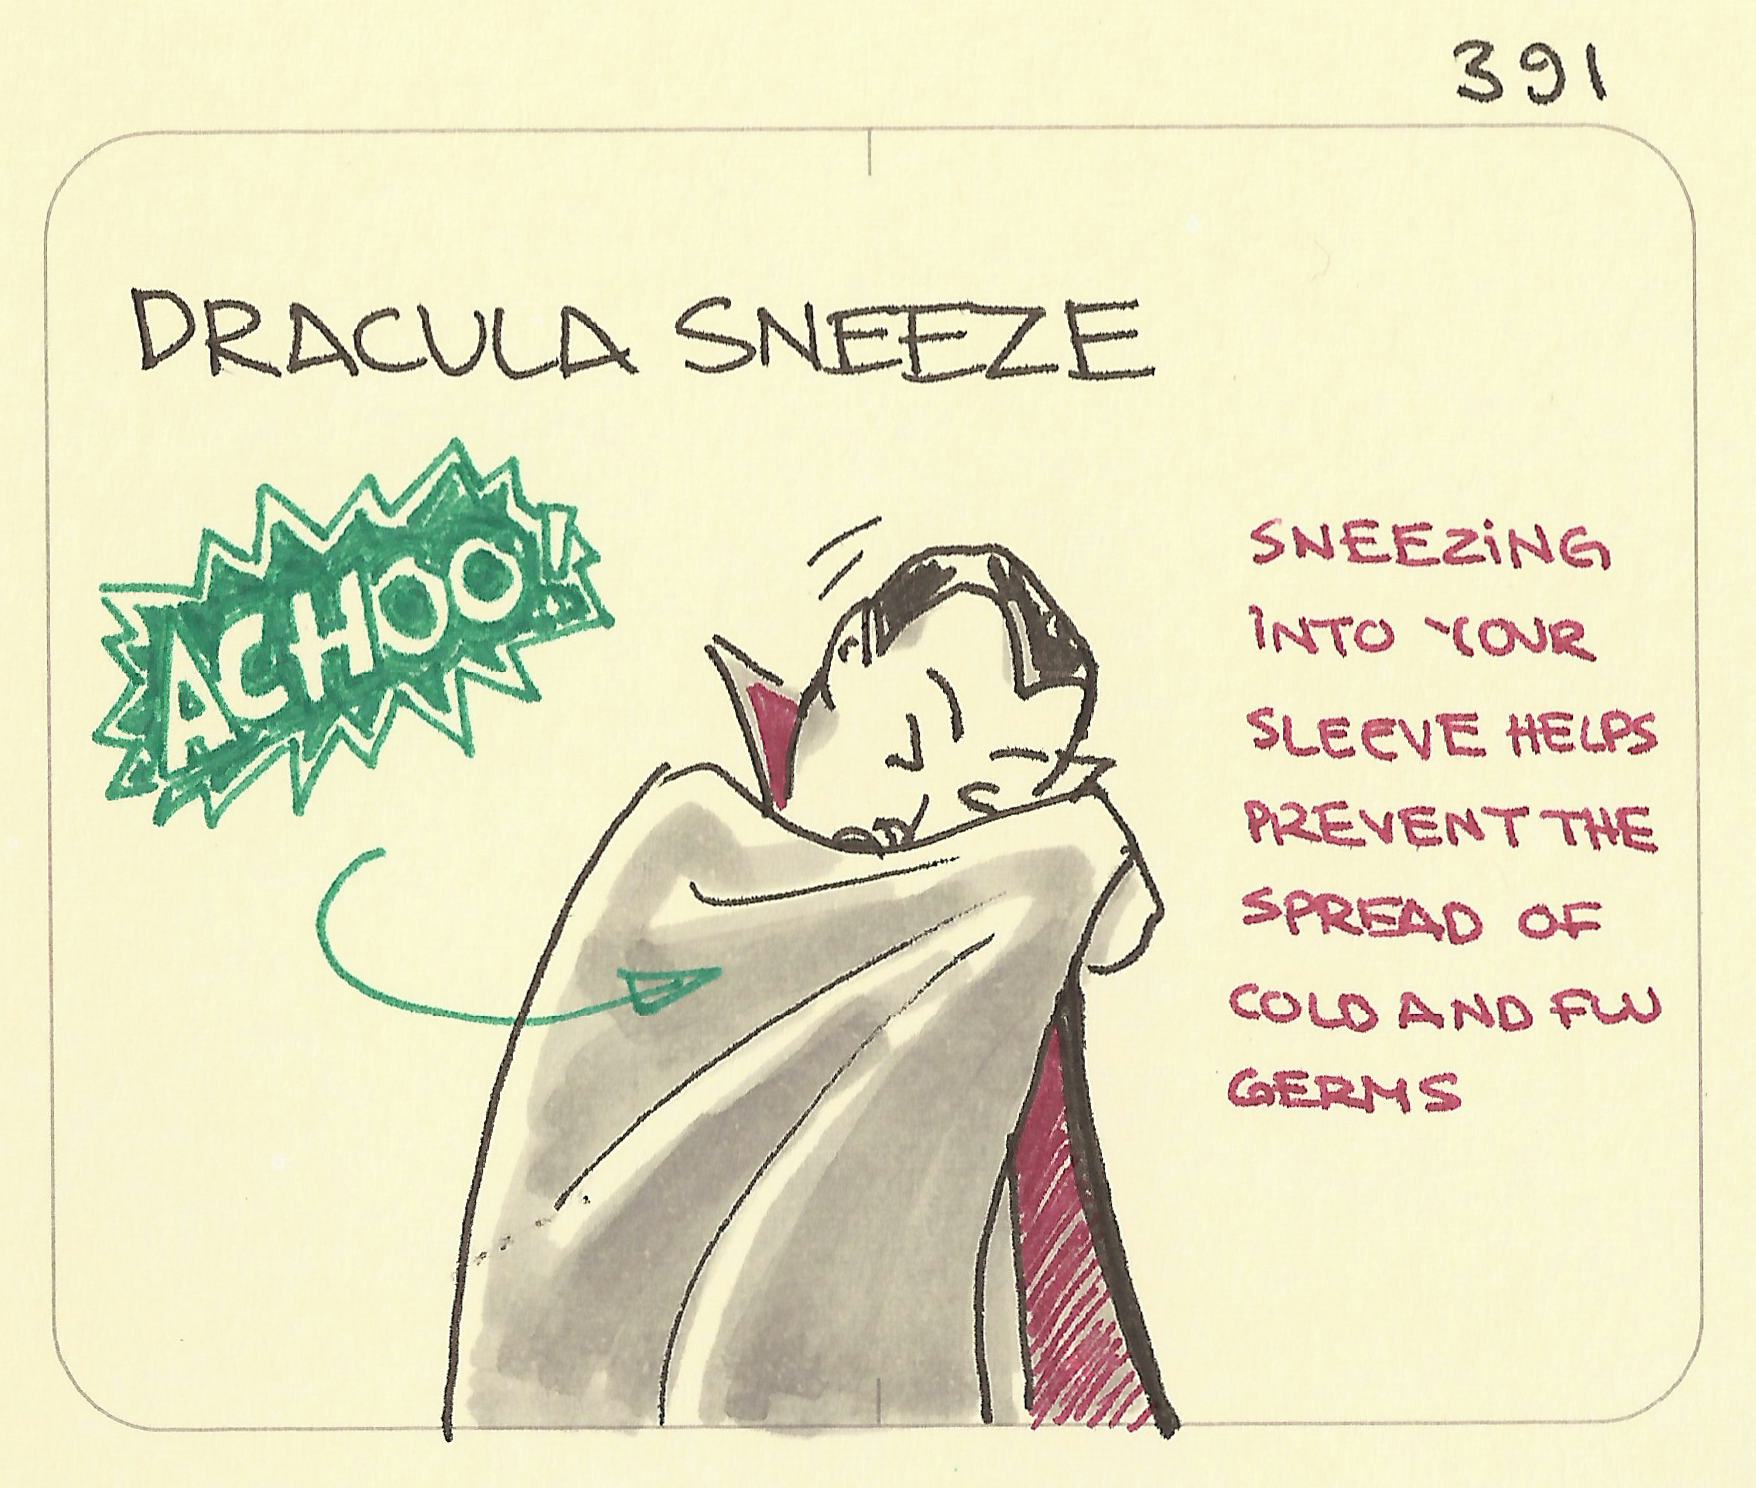 Dracula sneeze - Sketchplanations